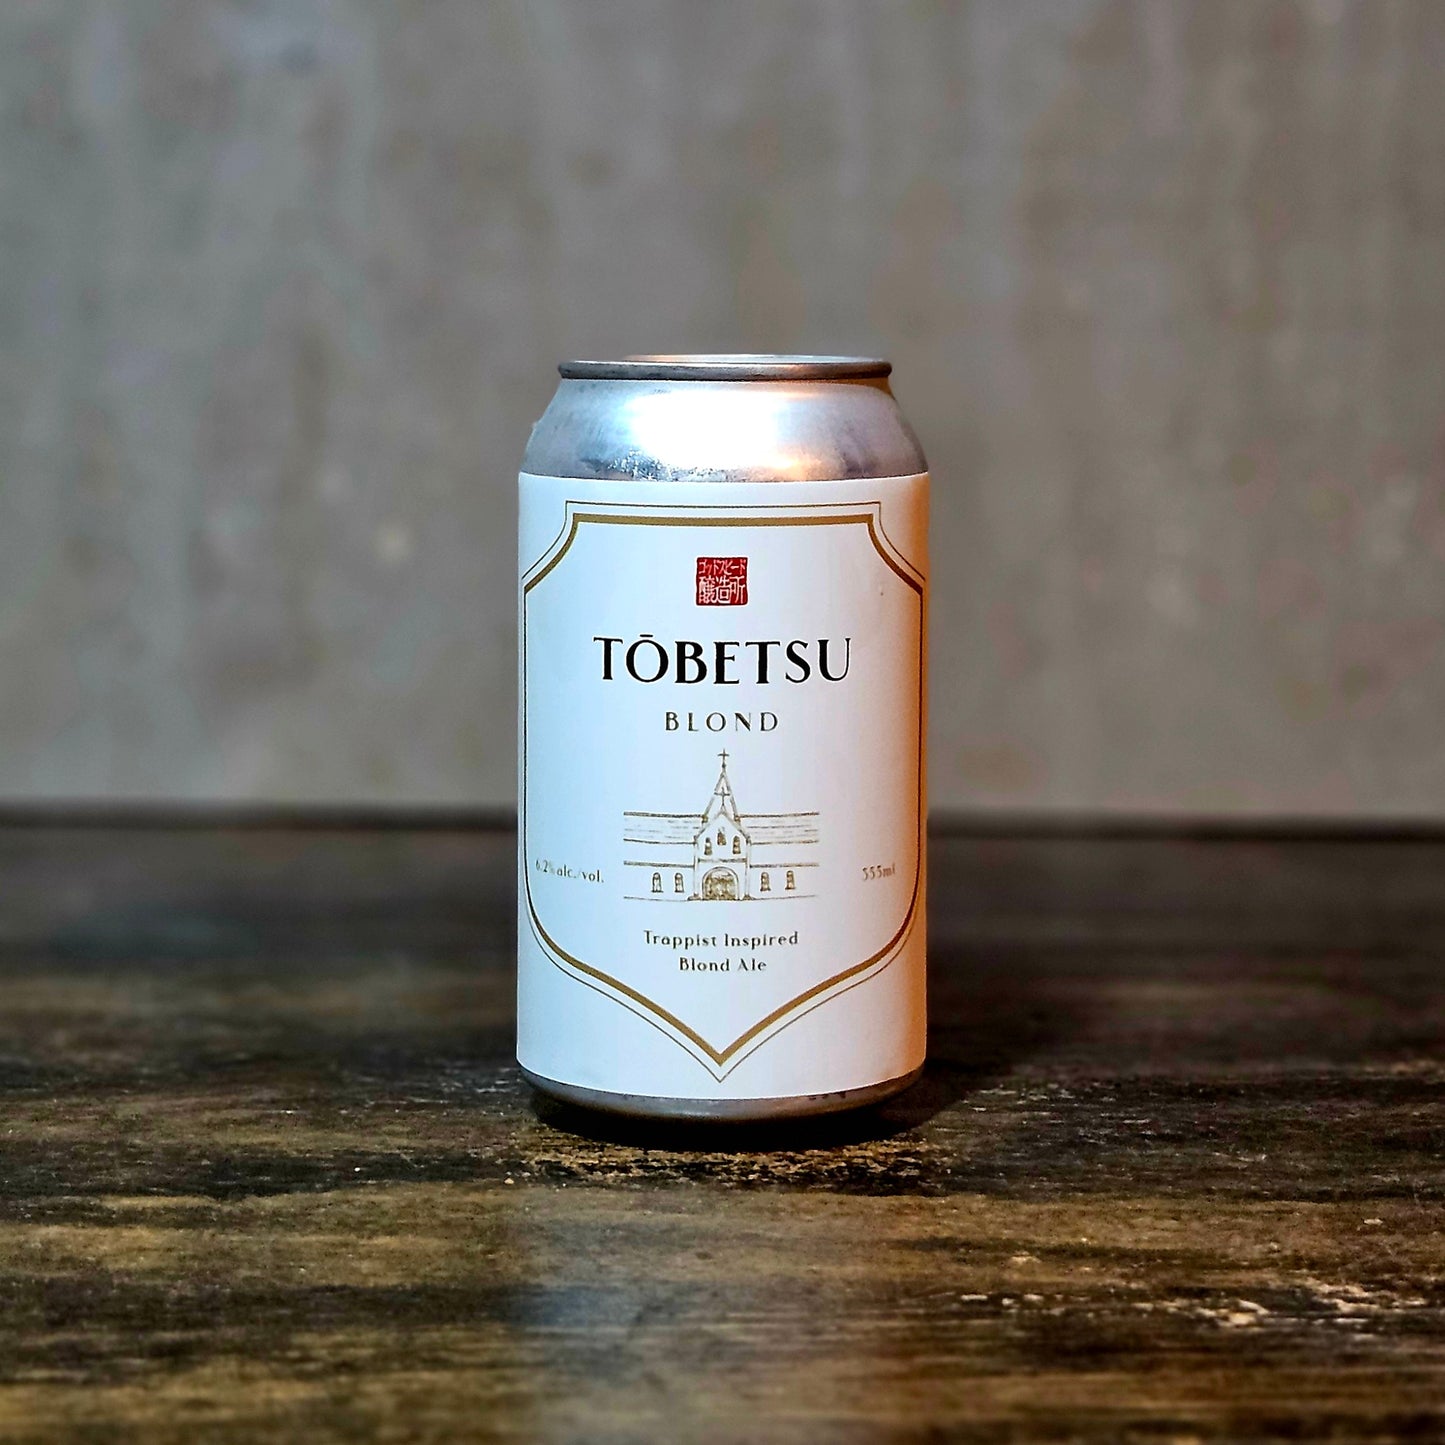 Godspeed "Tobetsu" Trappist style Blonde Ale